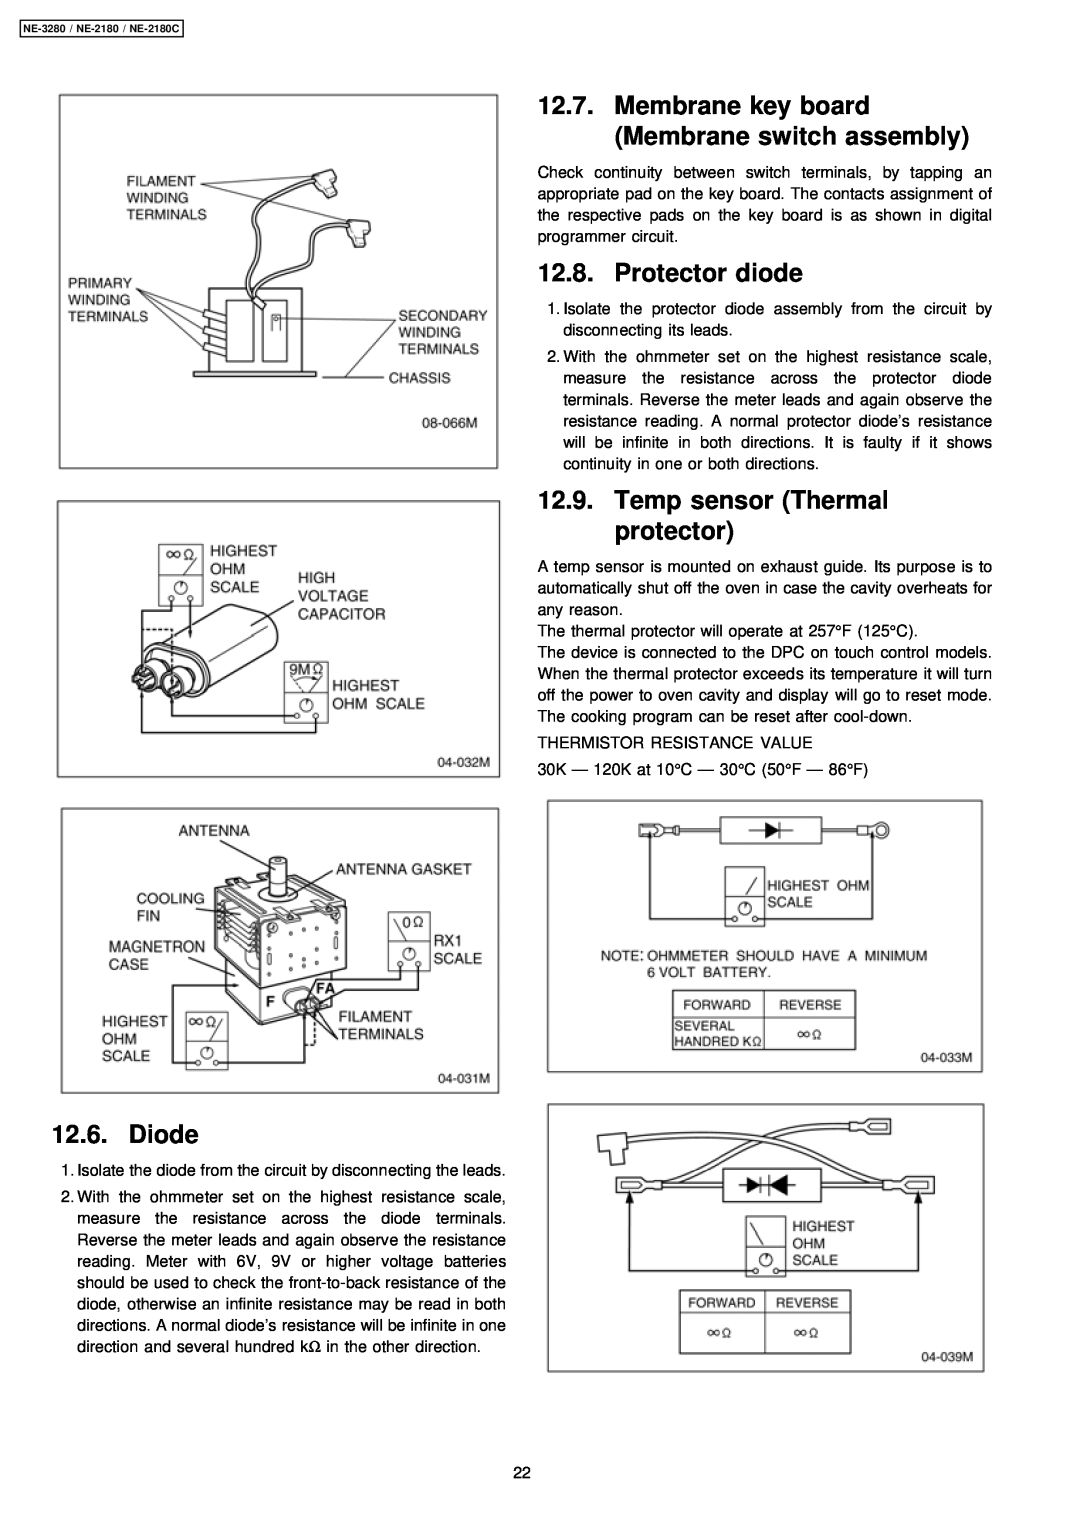 Panasonic NE-2180 manual Diode, Protector diode, Temp sensor Thermal protector, Membrane key board Membrane switch assembly 